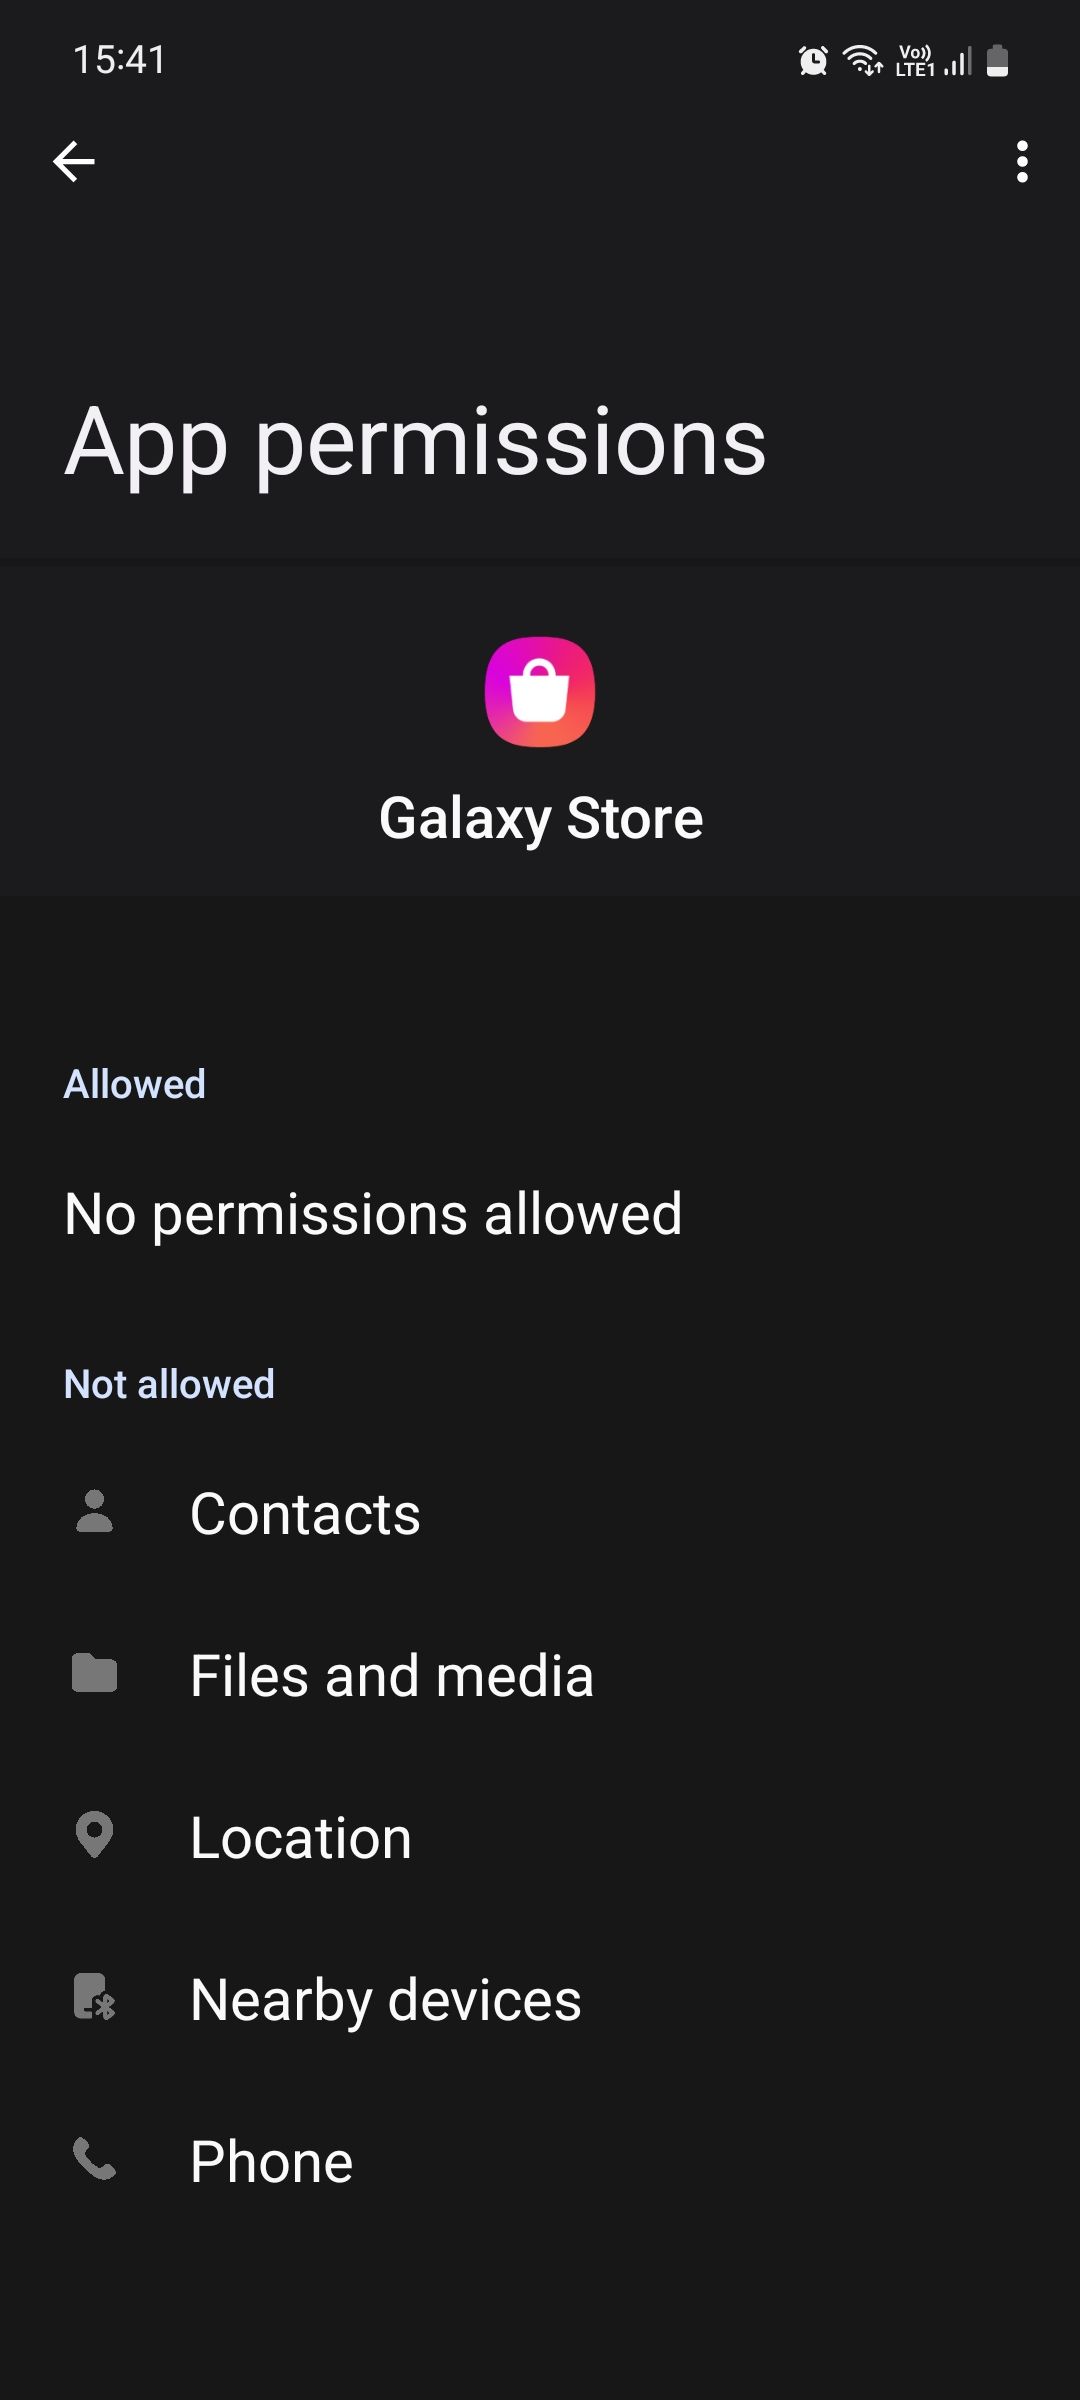 Samsung Galaxy Store app permissions